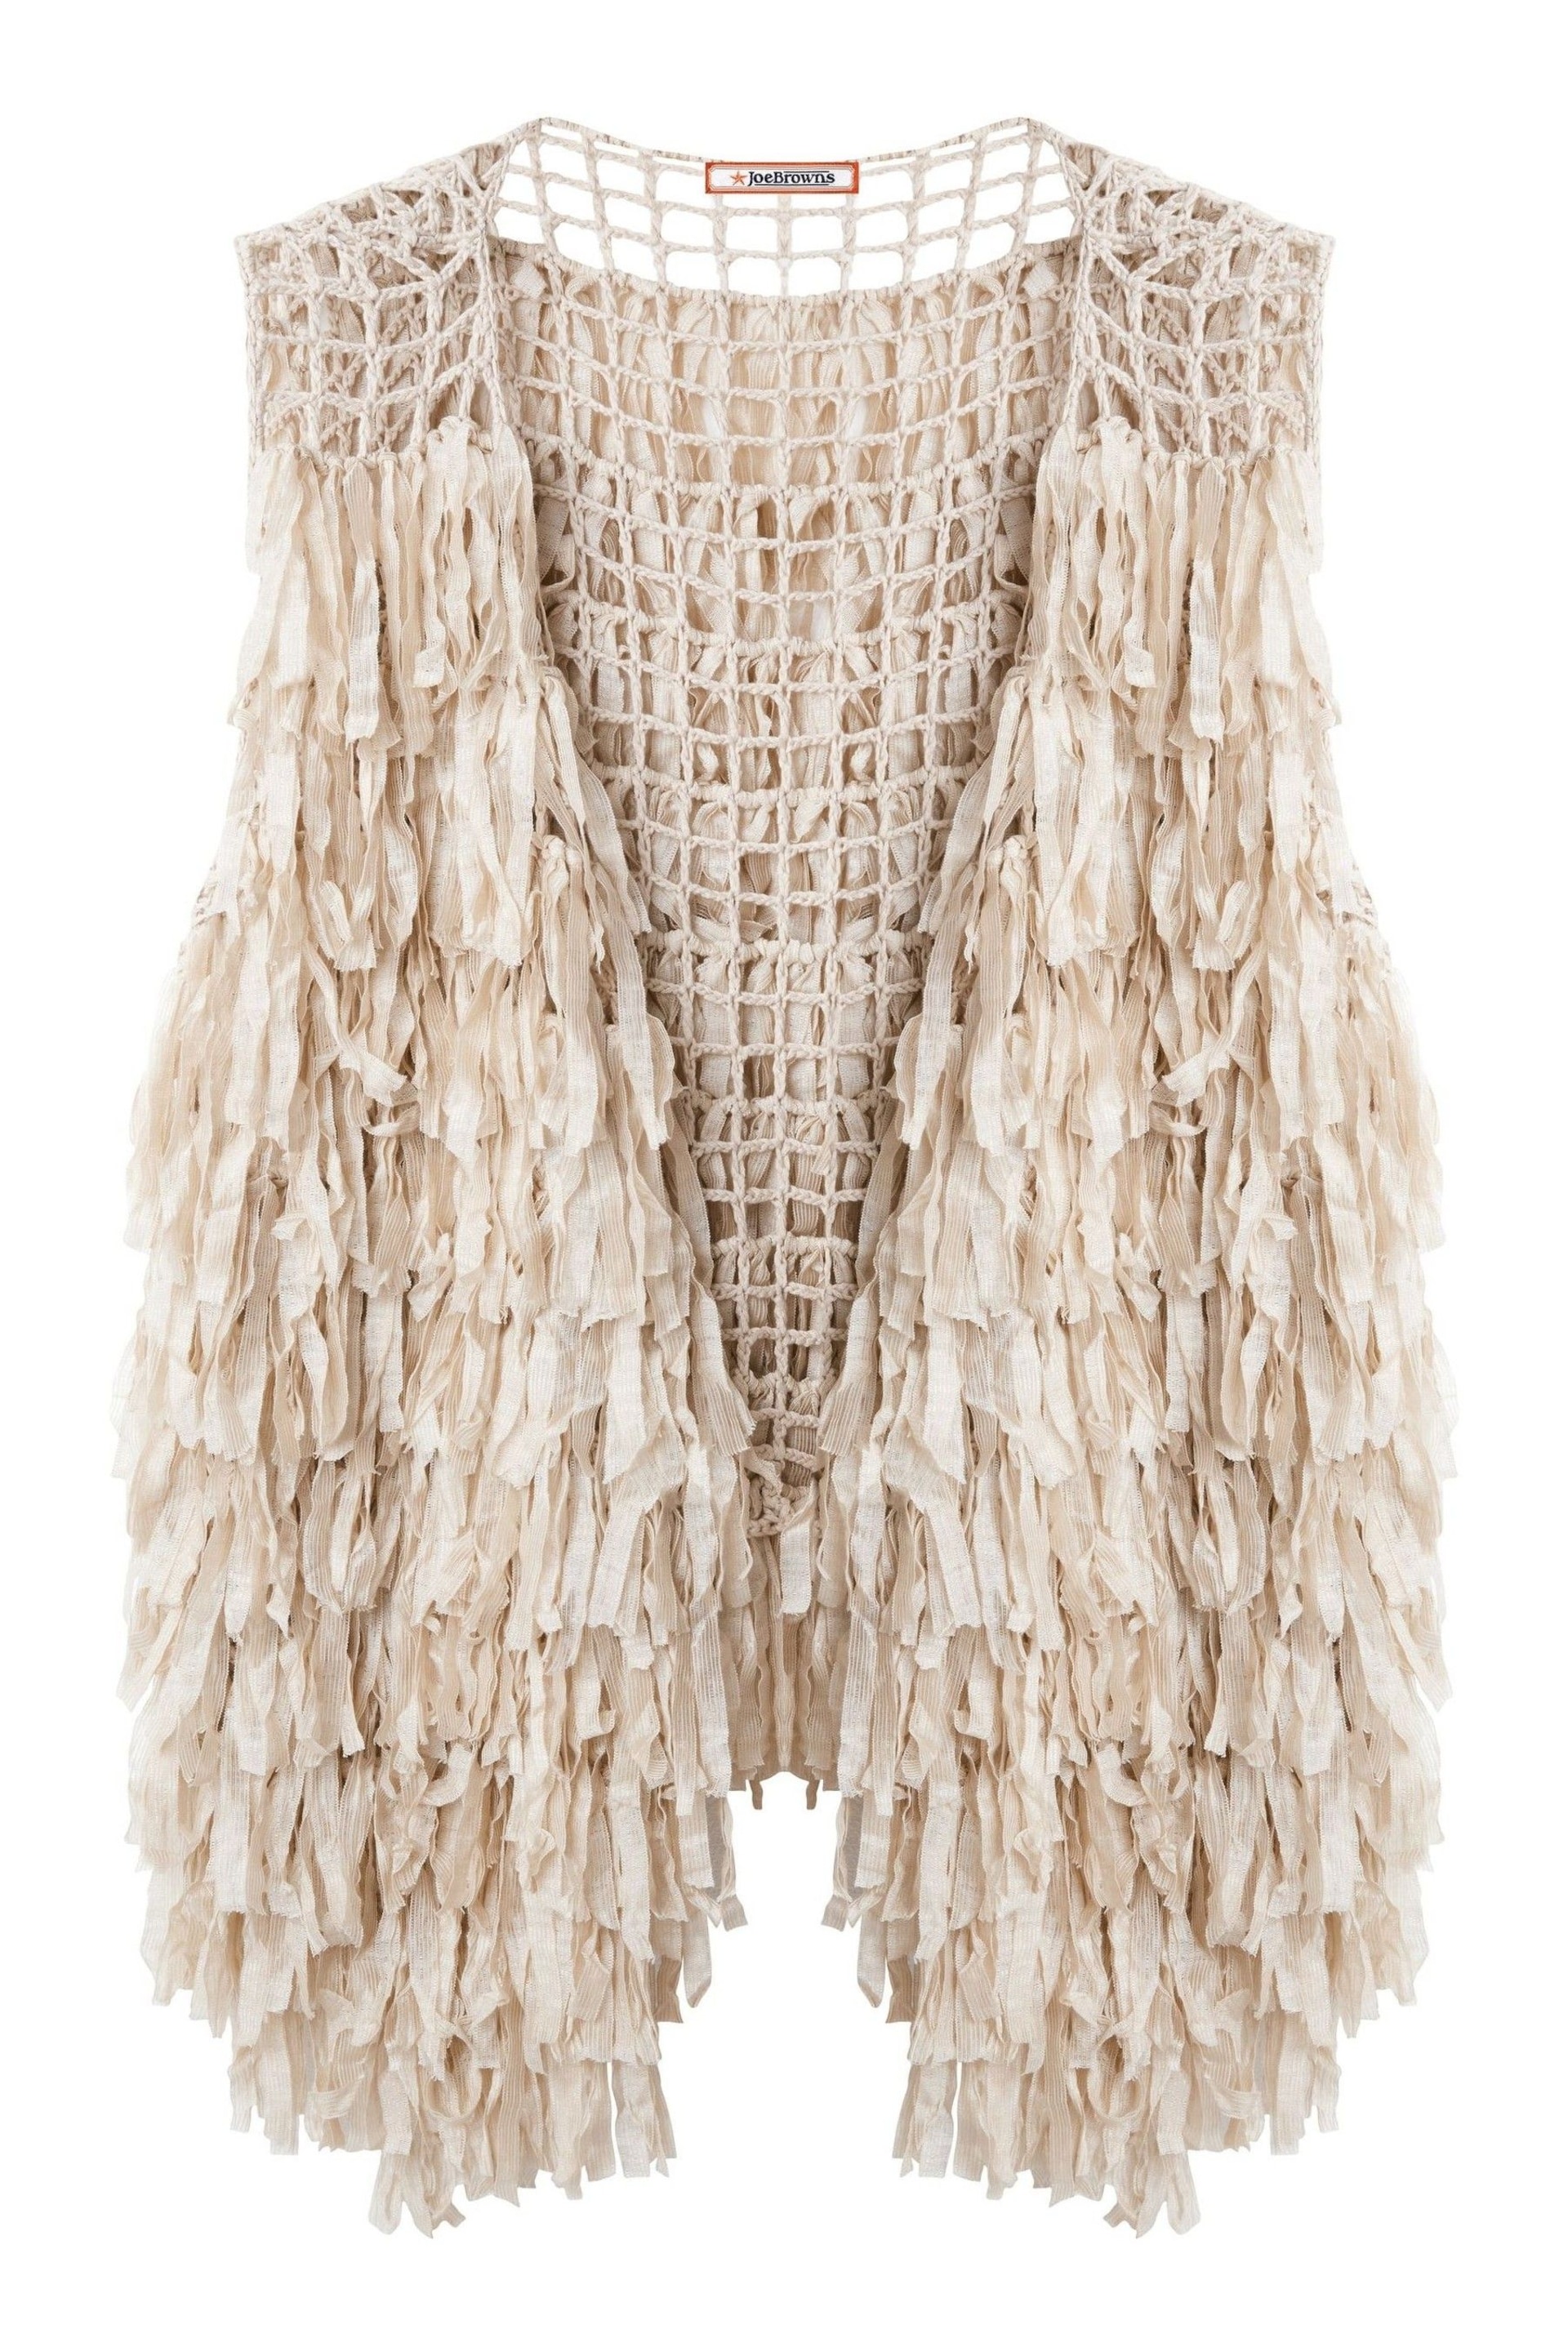 Joe Browns Natural Crochet Tassel Waistcoat - Image 2 of 3